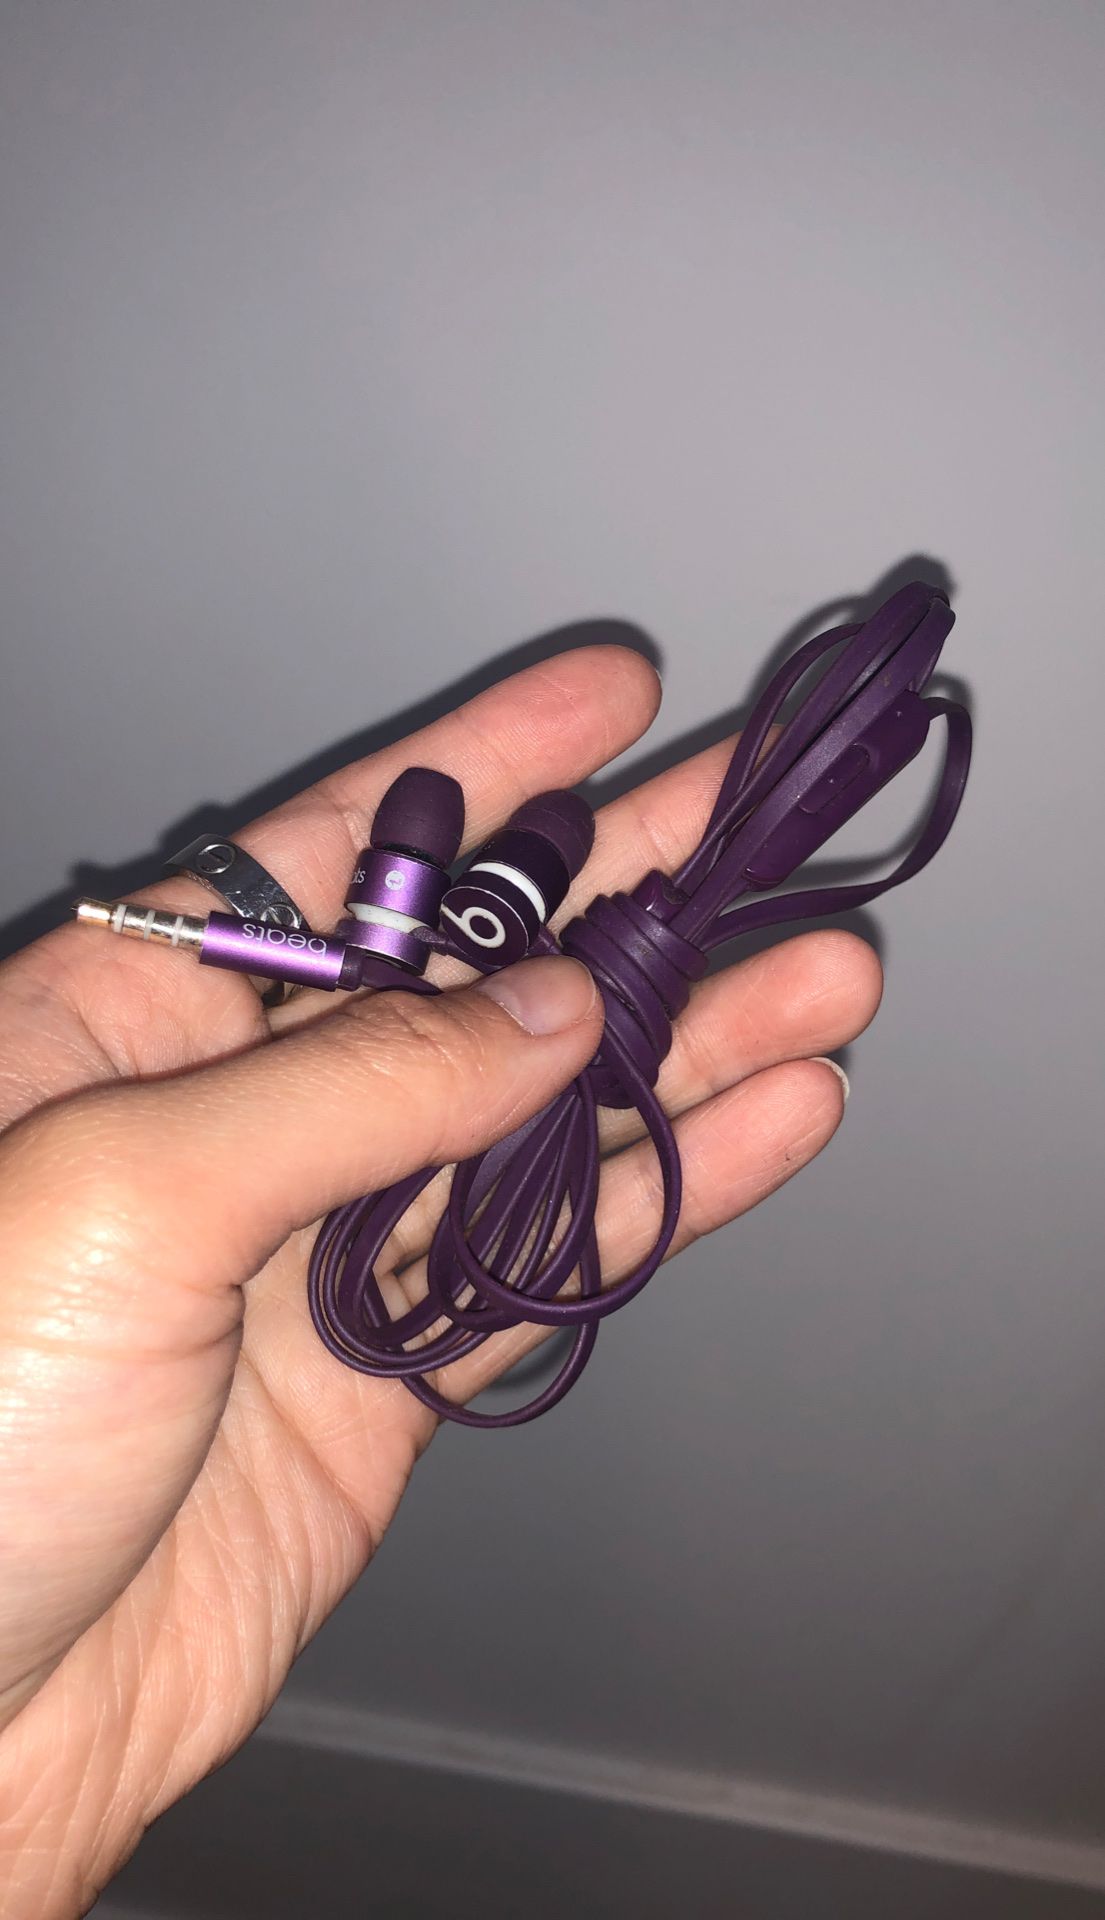 Purple Beats urbeats headphones